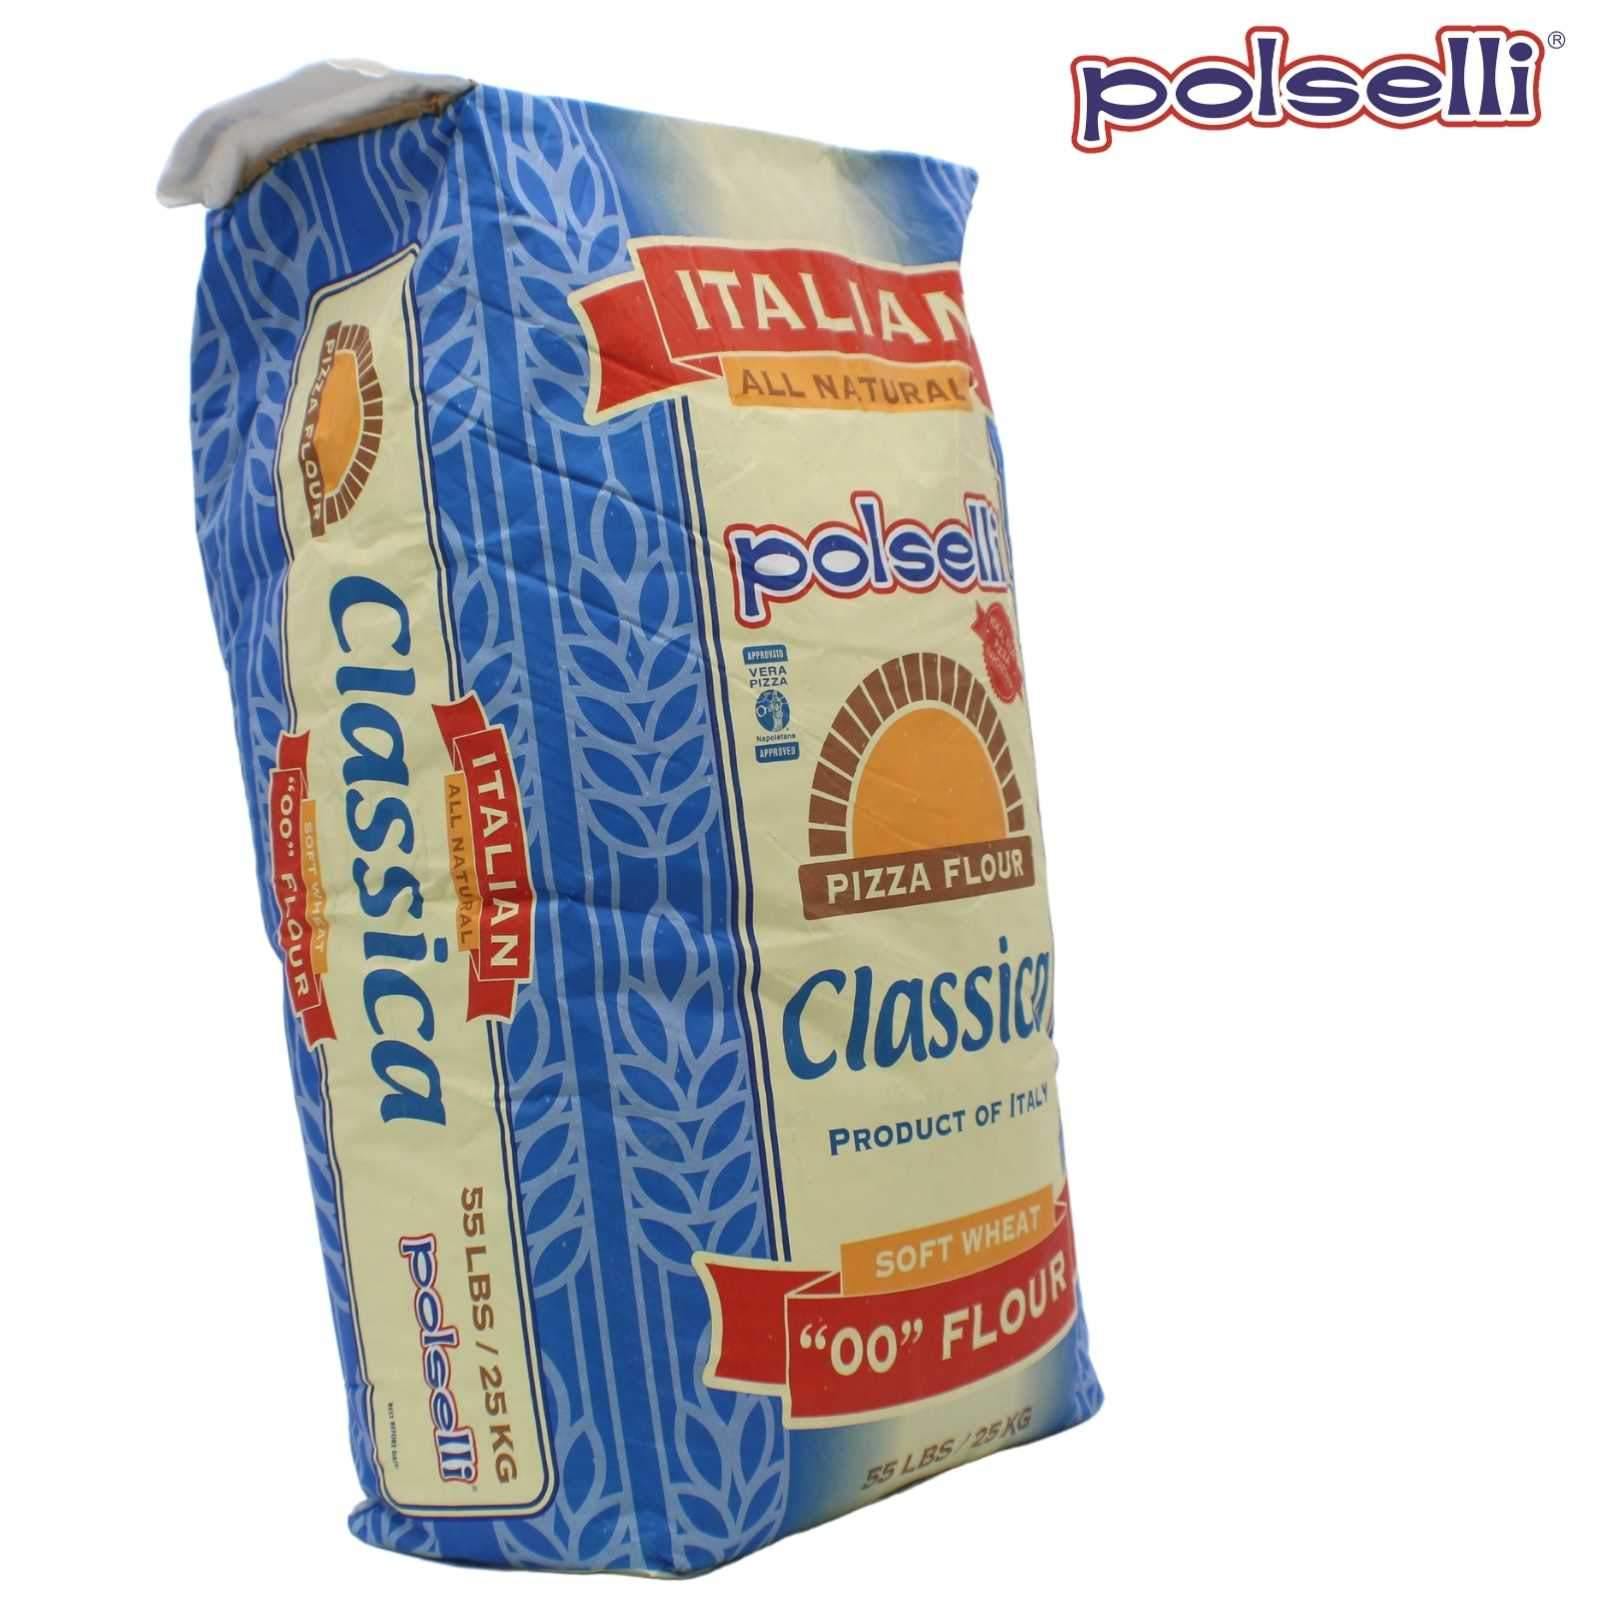 Polselli 00 Pizza Flour Classica Real Italian Pizza Flour ALL NATURAL (55lbs) Wholesale Italian Foods Side View